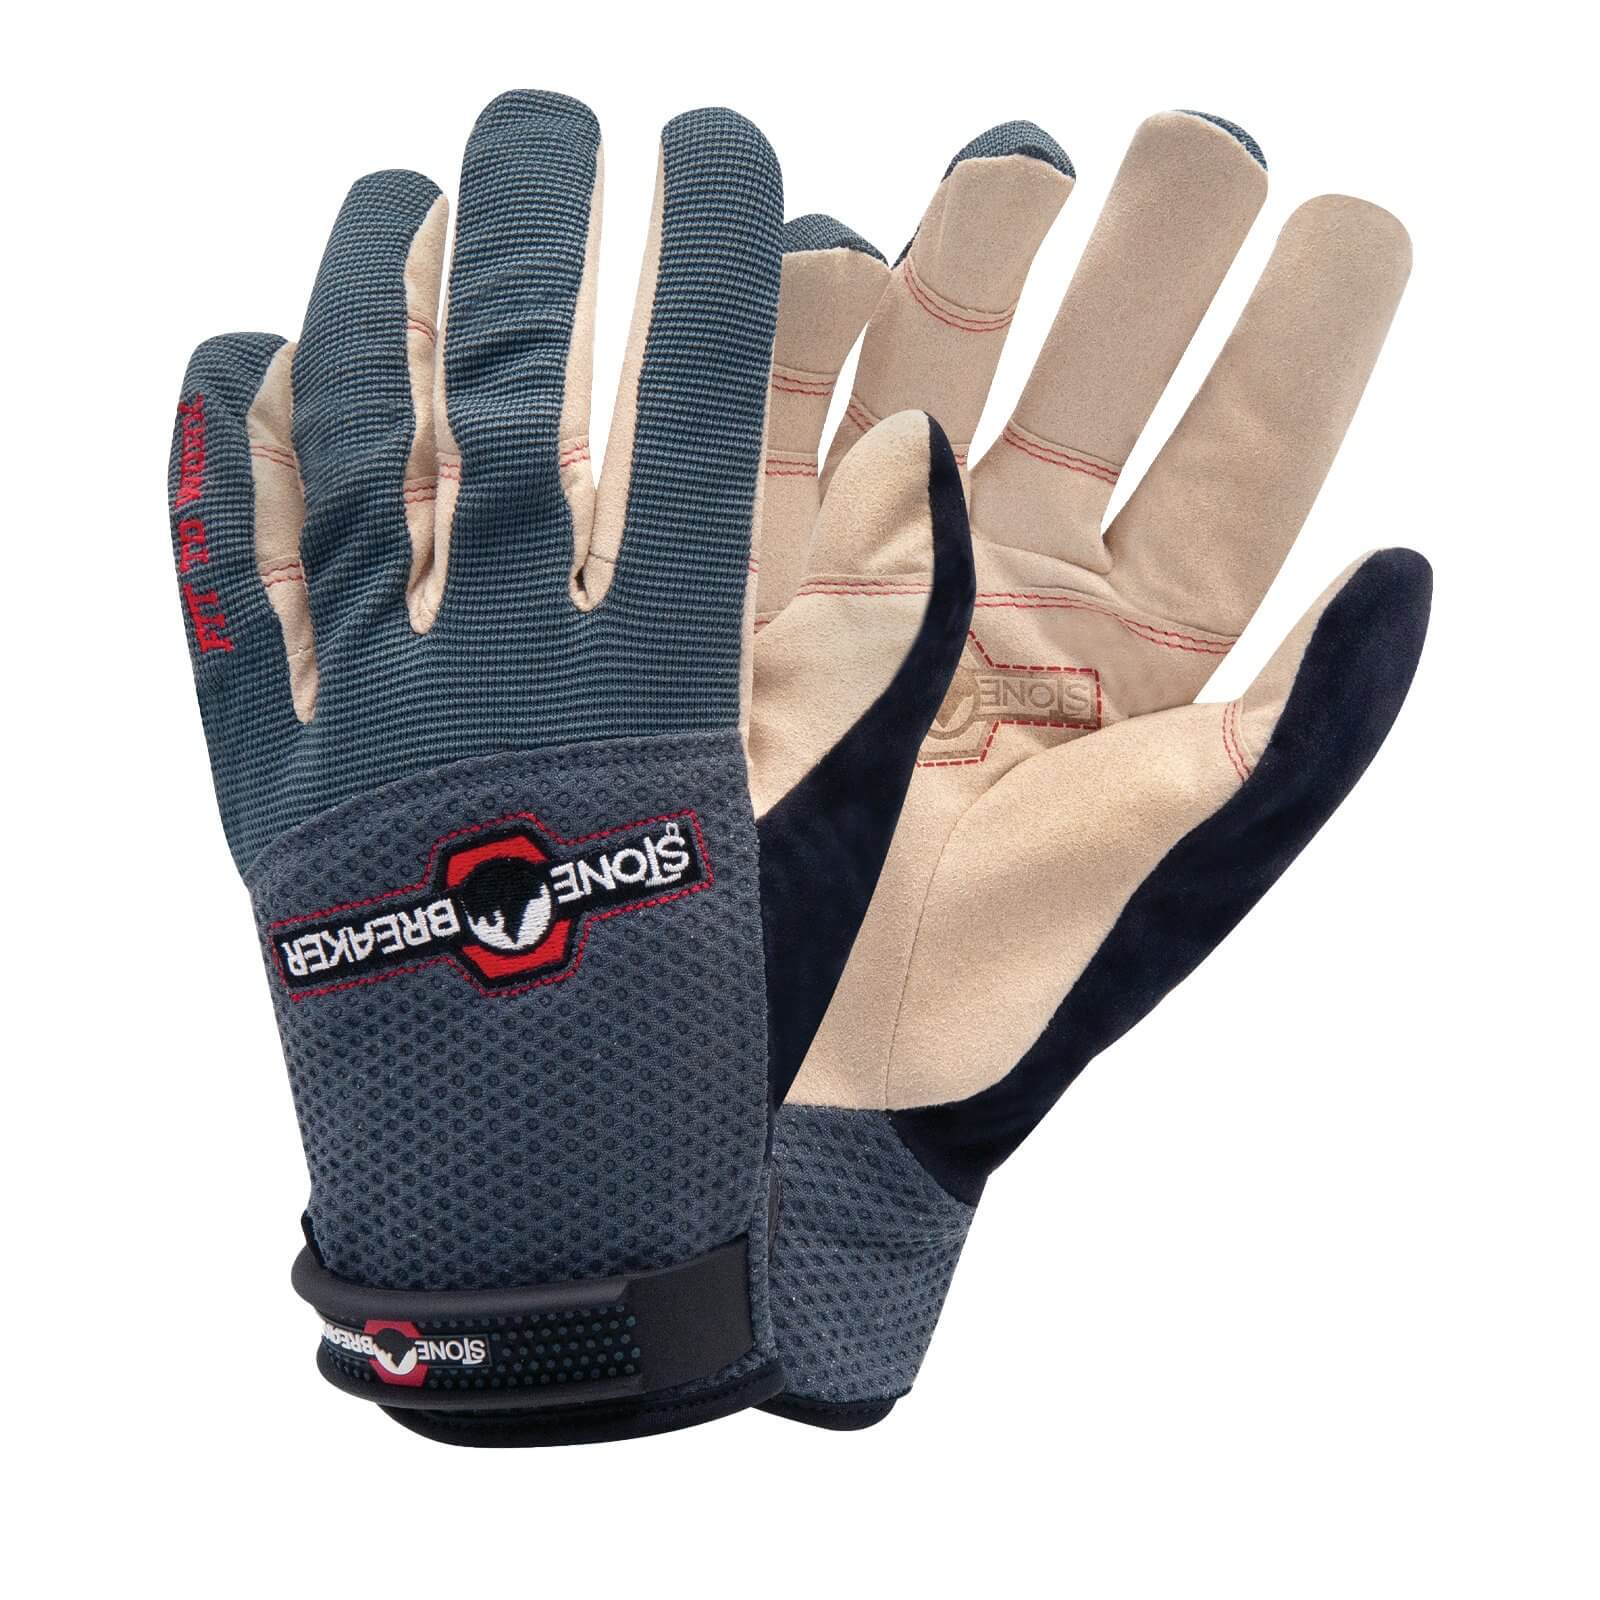 StoneBreaker Nailbender Trades Work Gloves - Medium - Charcoal